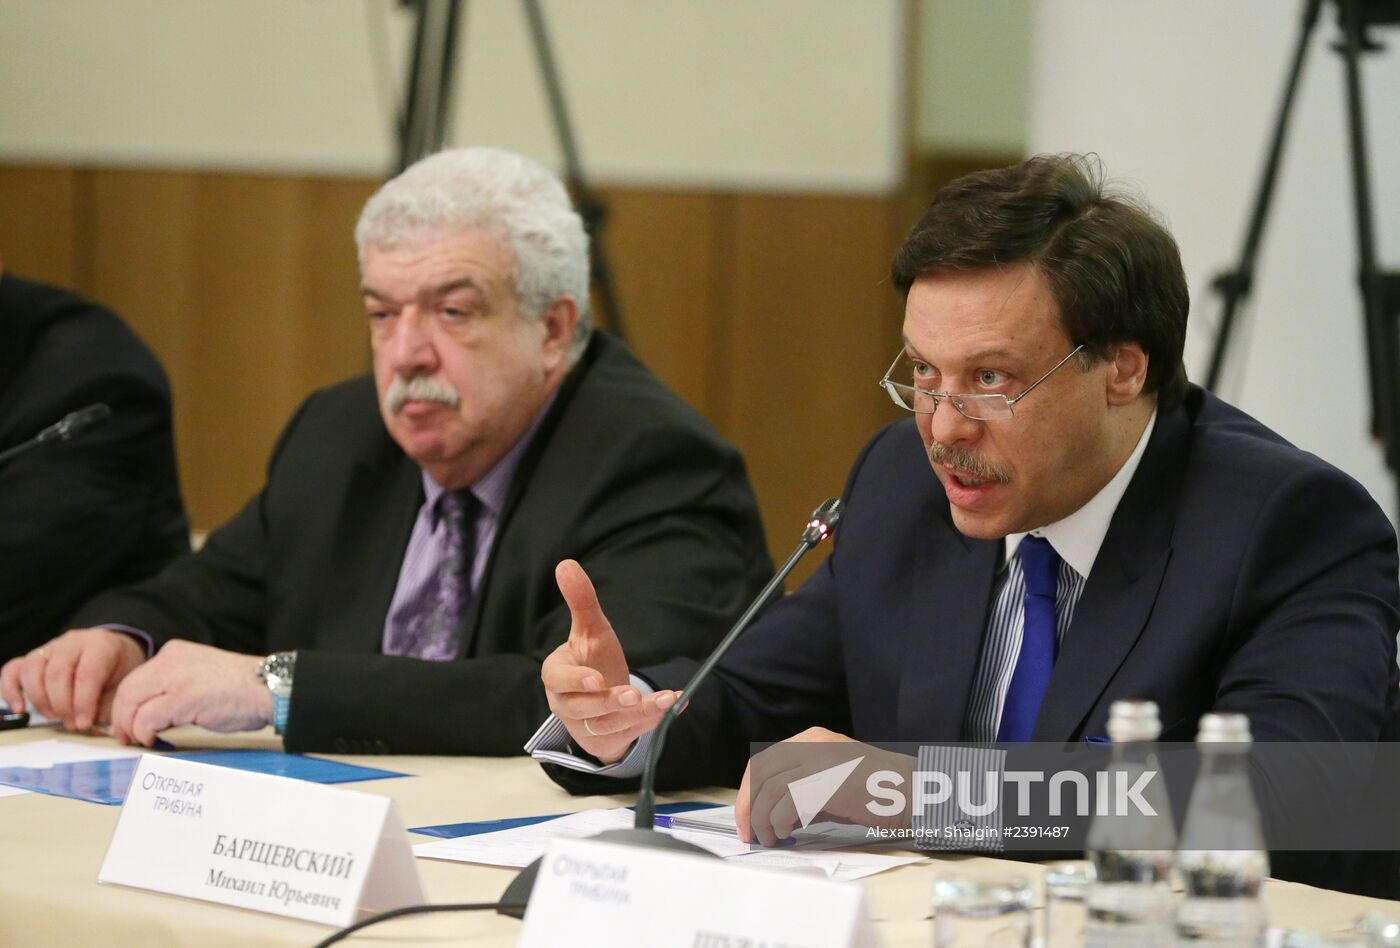 Open Tribune discussion on Ukraine's developments toward peaceful settlement